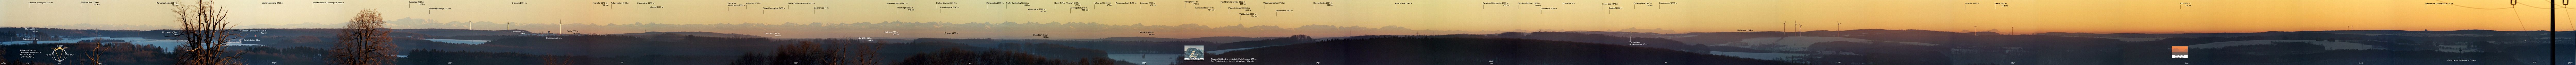 Alpen-Panorama von Geislingen-Stötten